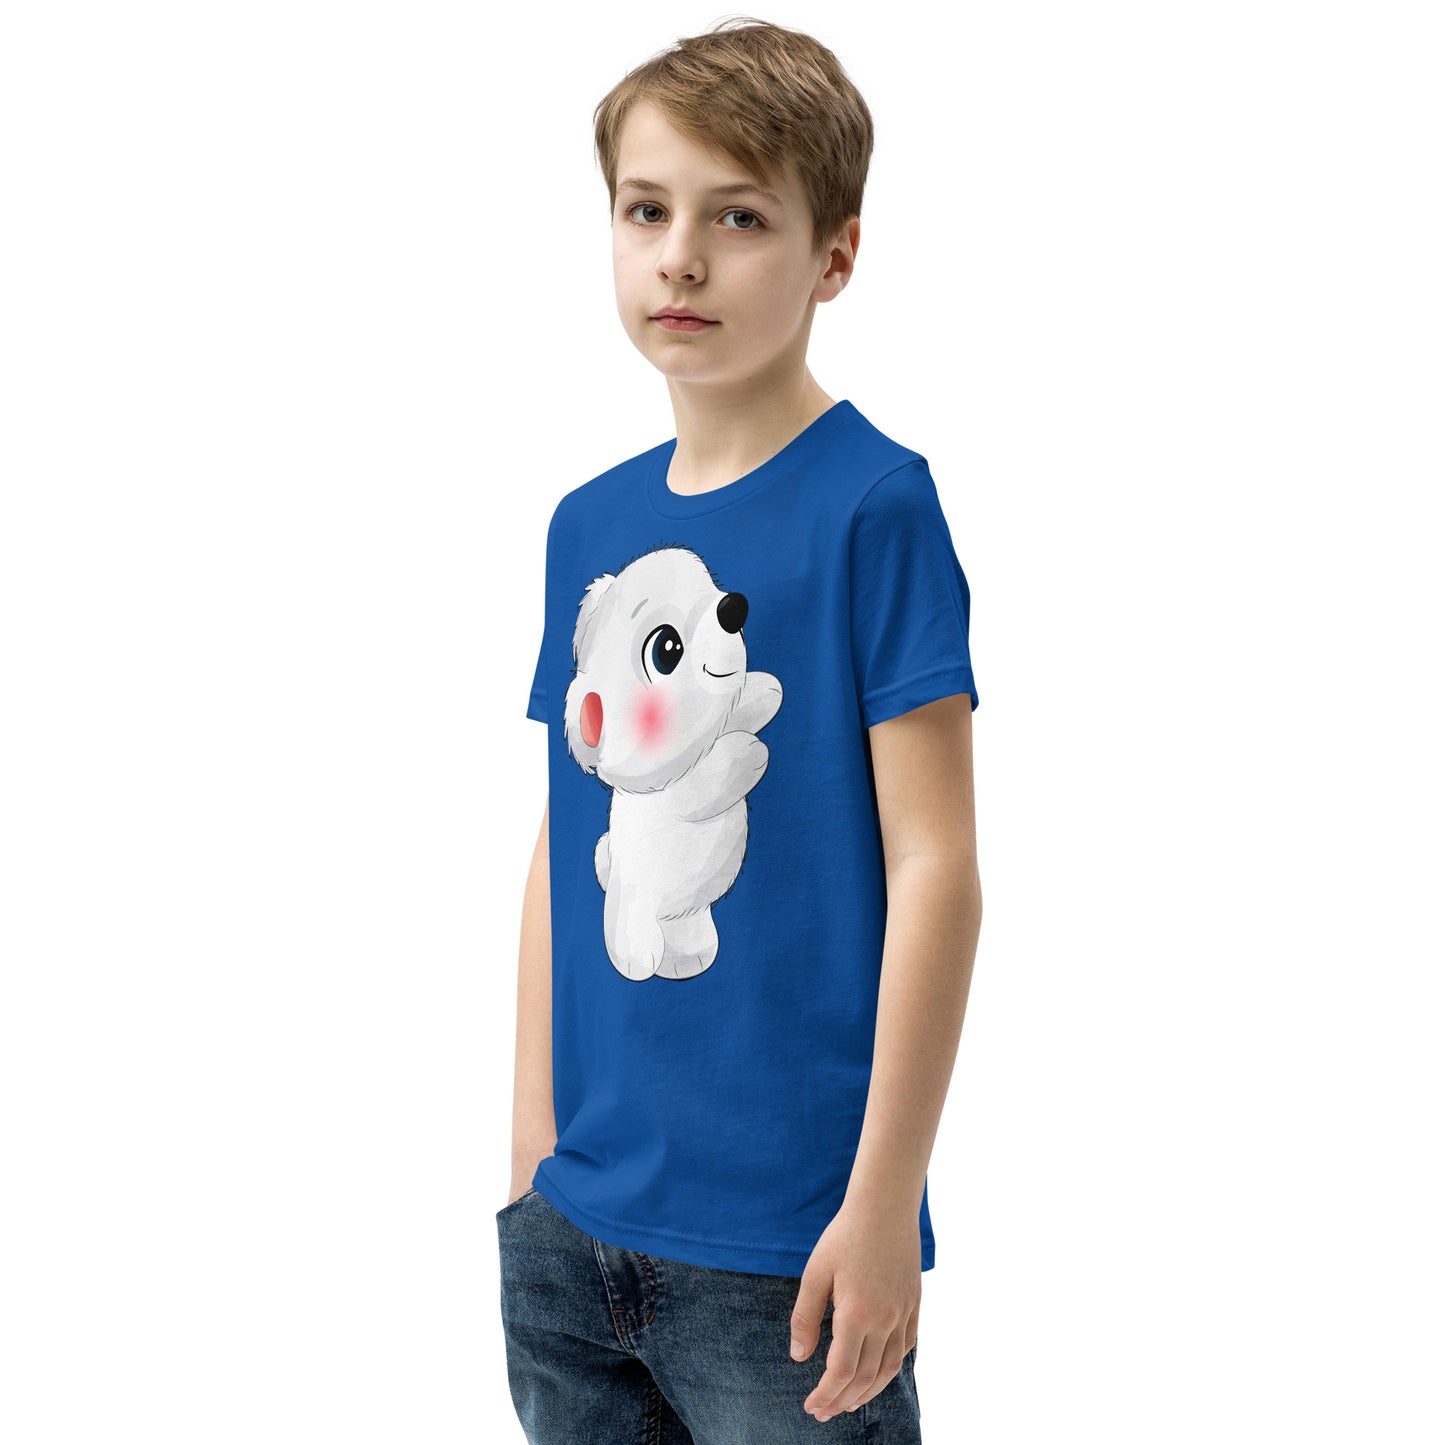 Charming Polar Bear T-shirt, No. 0021